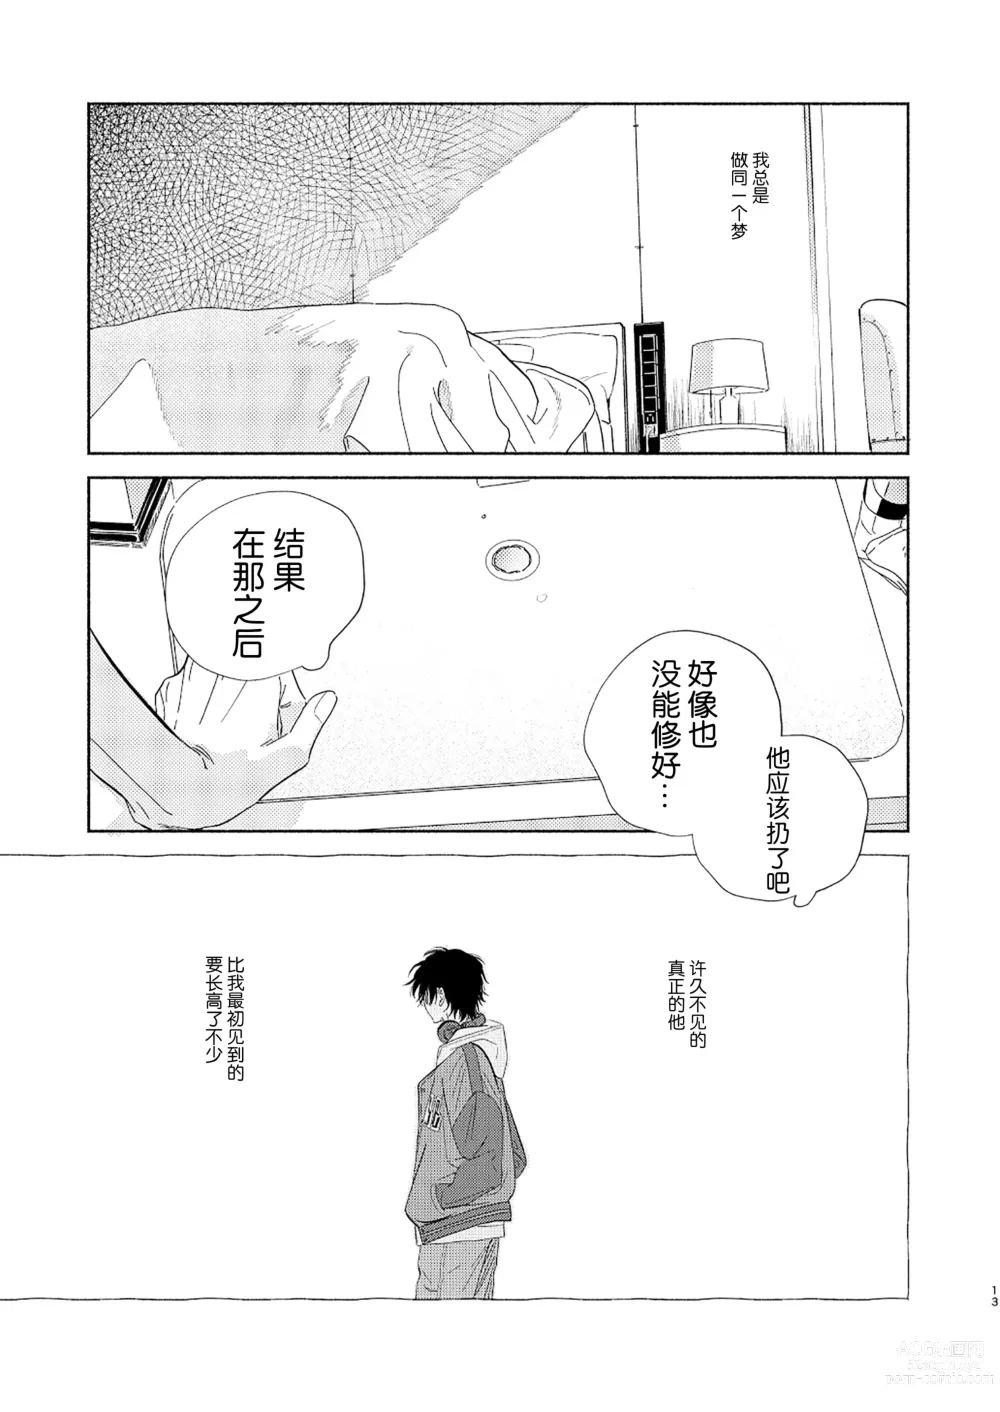 Page 10 of doujinshi 缺失的碎片